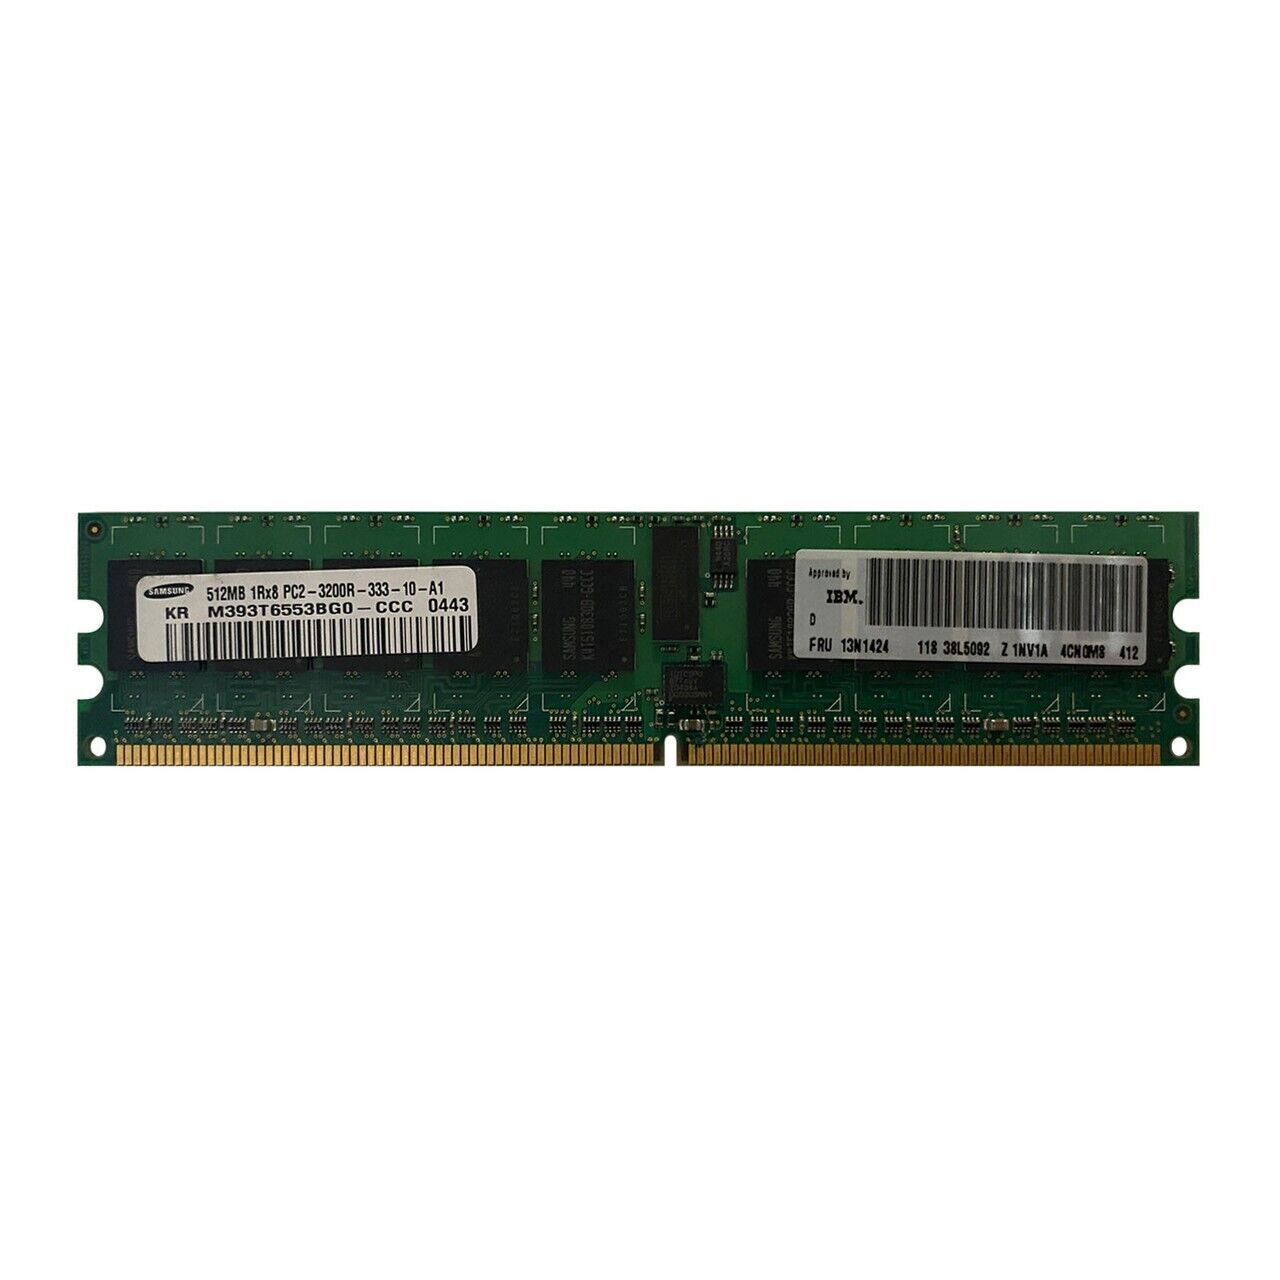 IBM 13N1424 512MB PC2-3200 DDR2 Memory Module 38L5092